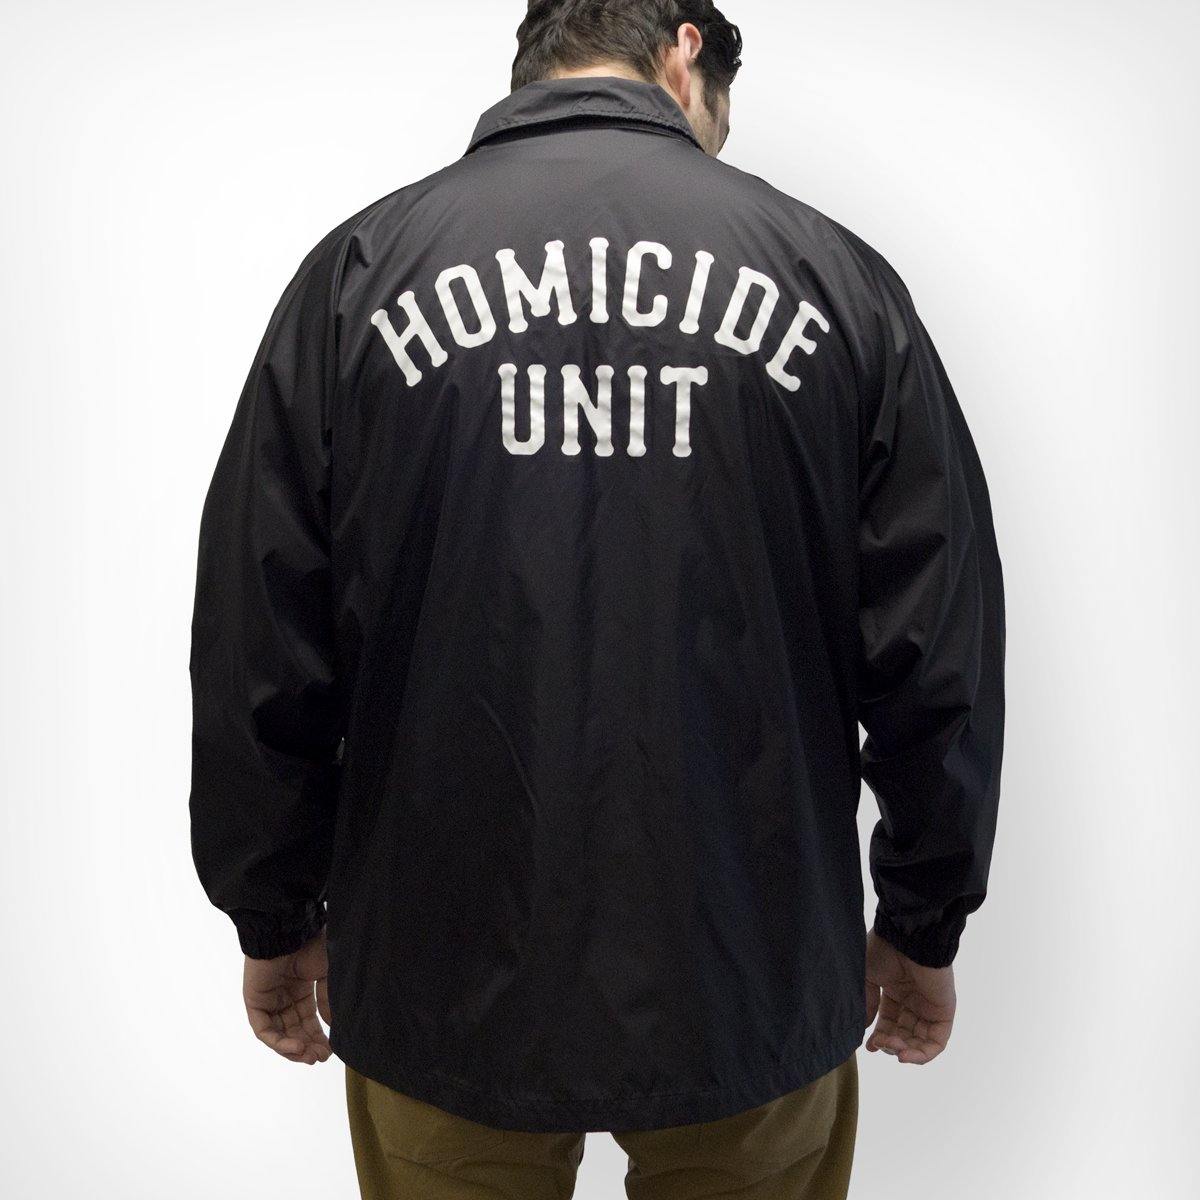 Buy – Homicide Unit Coaches Jacket – Cold Cuts Ltd